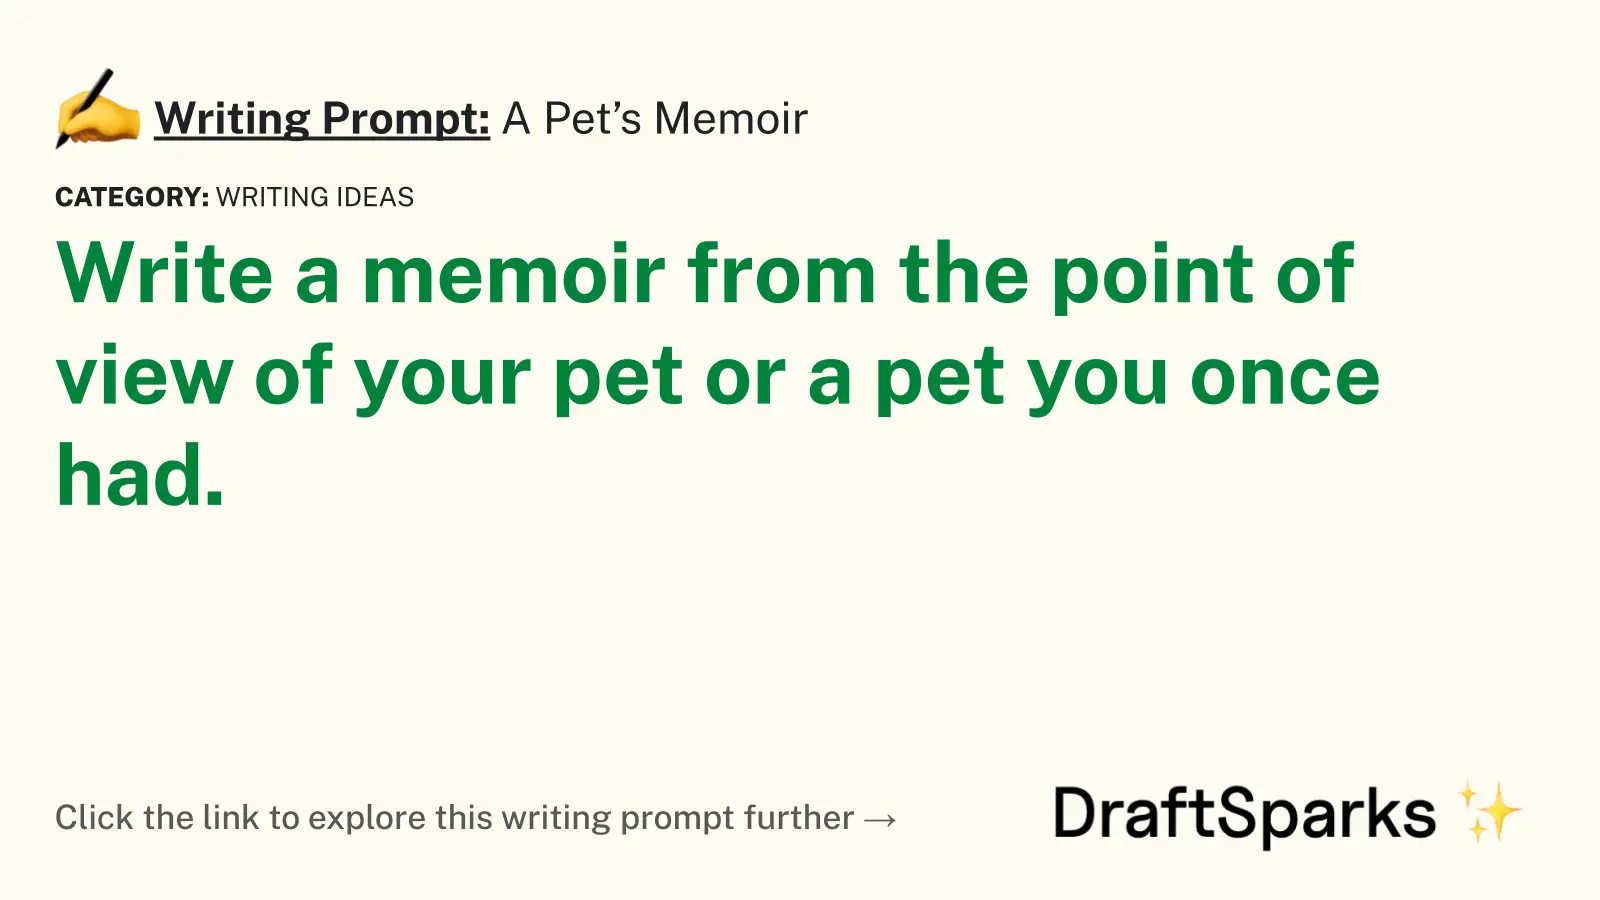 A Pet’s Memoir